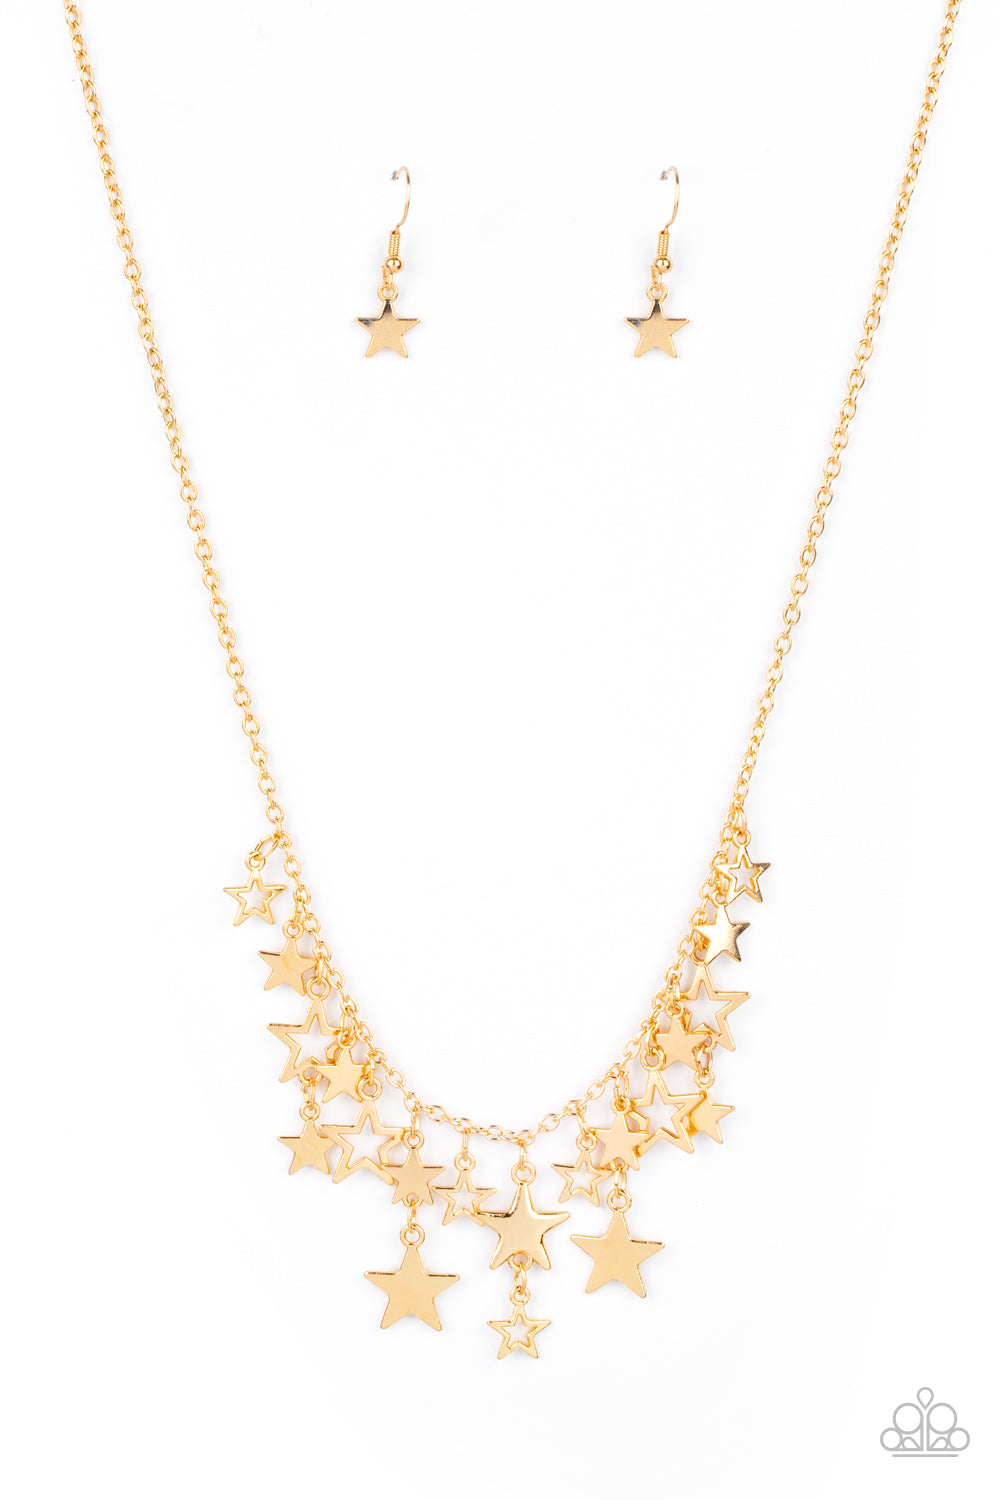 Stellar Stardom - Gold Necklace Set - Princess Glam Shop